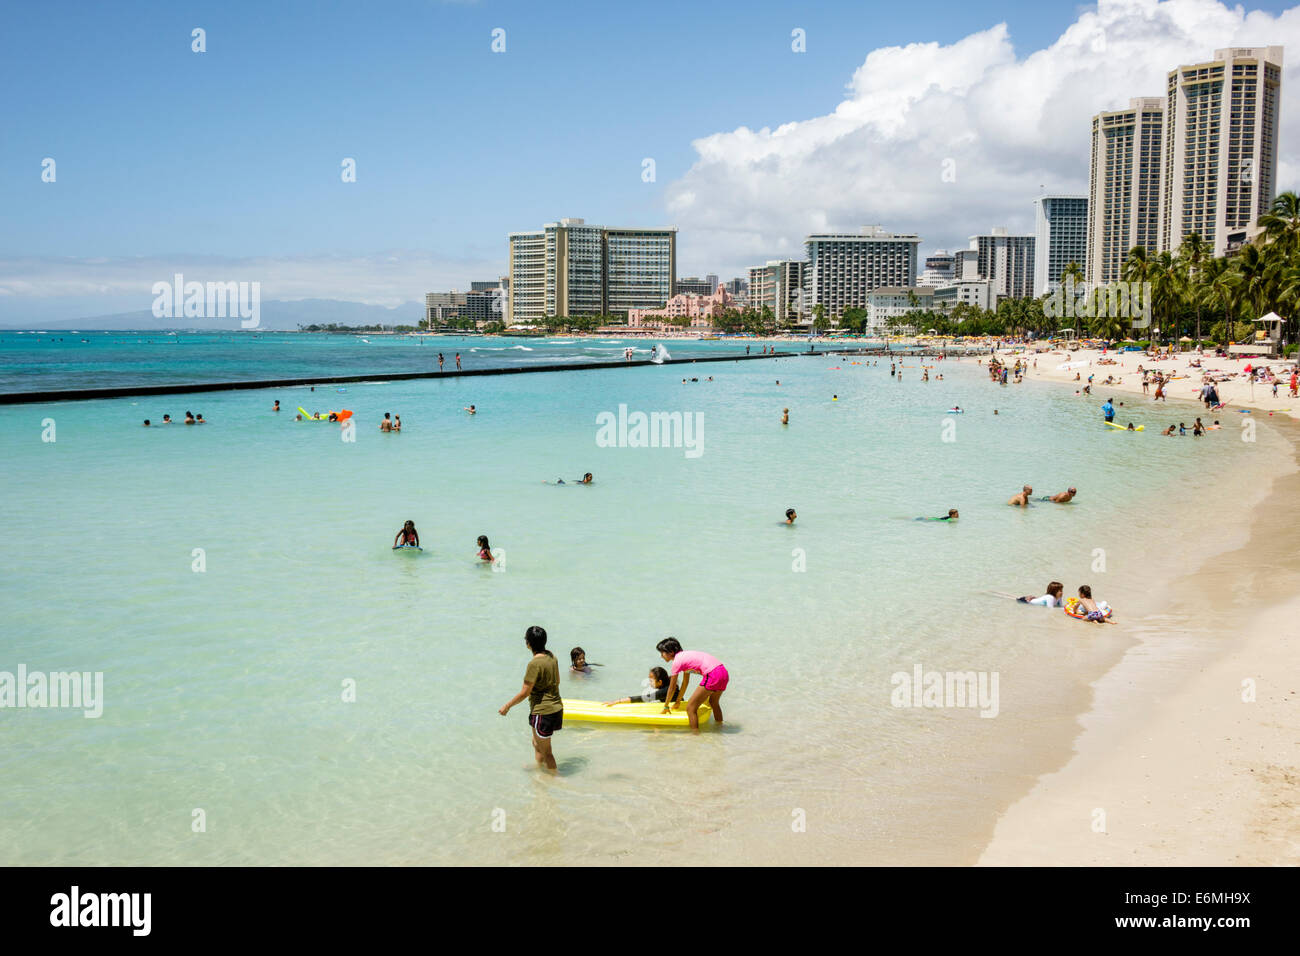 Honolulu Waikiki Beach Hawaii,Hawaiian,Oahu,Kuhio Beach Park,Pacific Ocean,Sheraton,hotel,Hyatt Regency,waterfront,sunbathers,sand,city skyline,high r Stock Photo